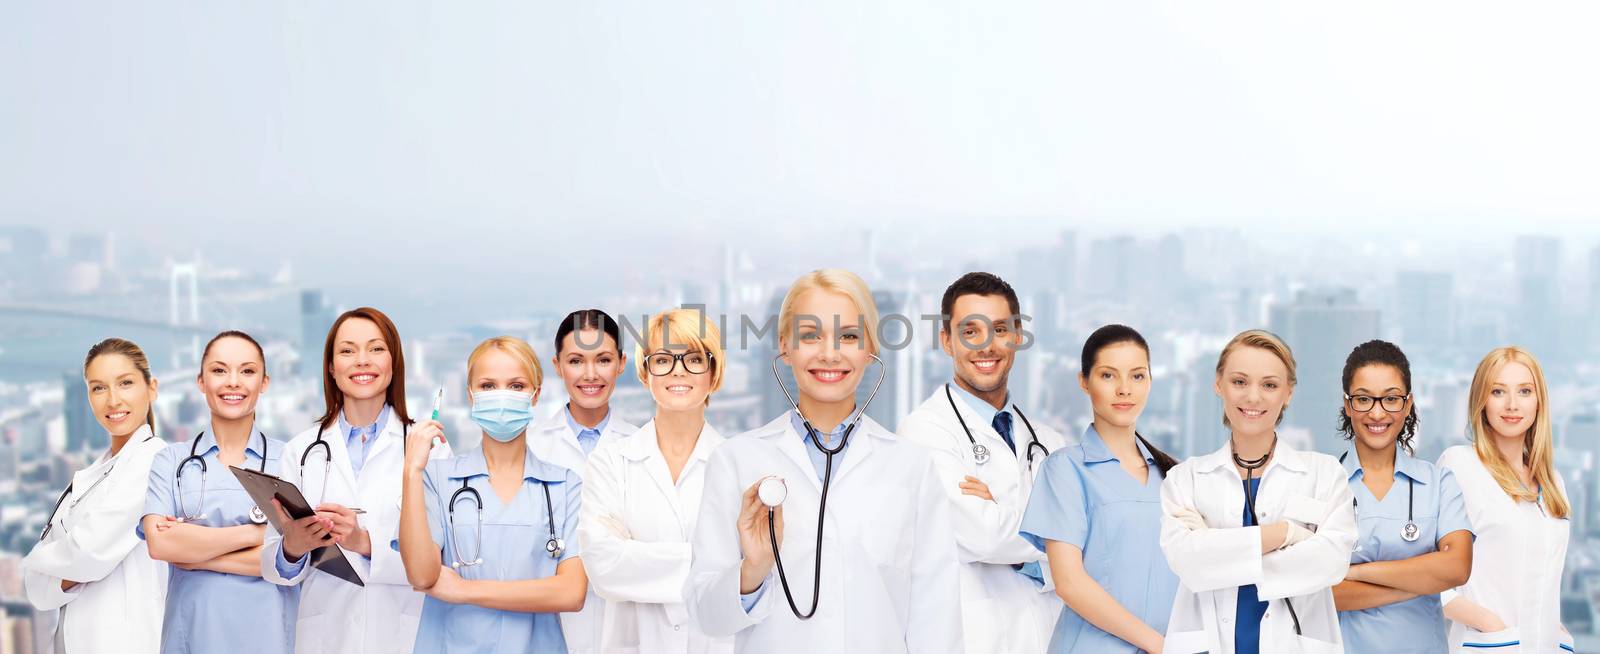 team or group of female doctors and nurses by dolgachov